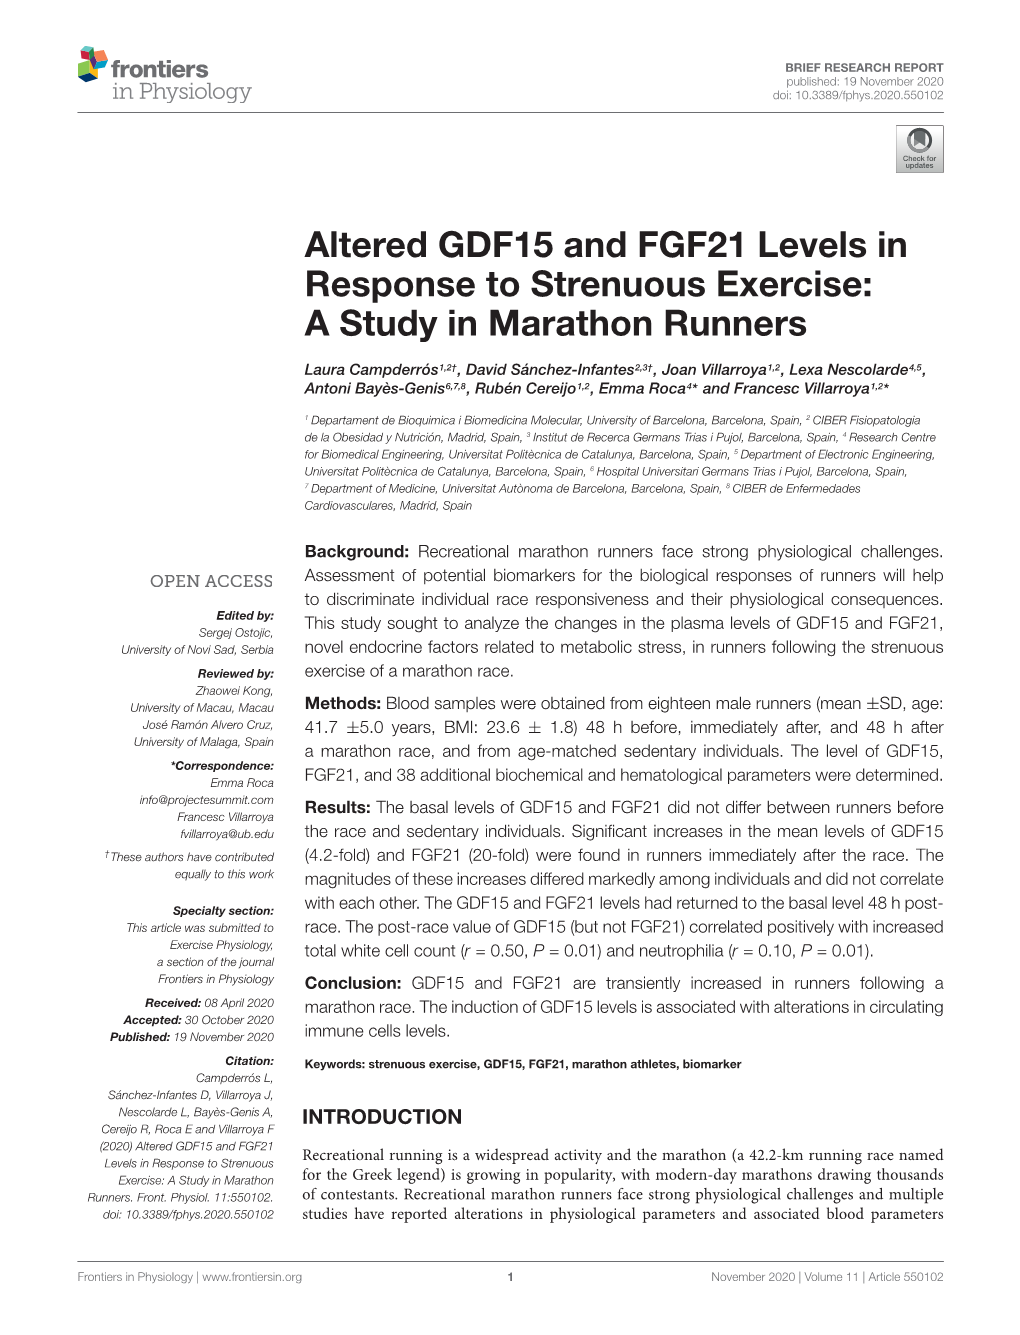 A Study in Marathon Runners